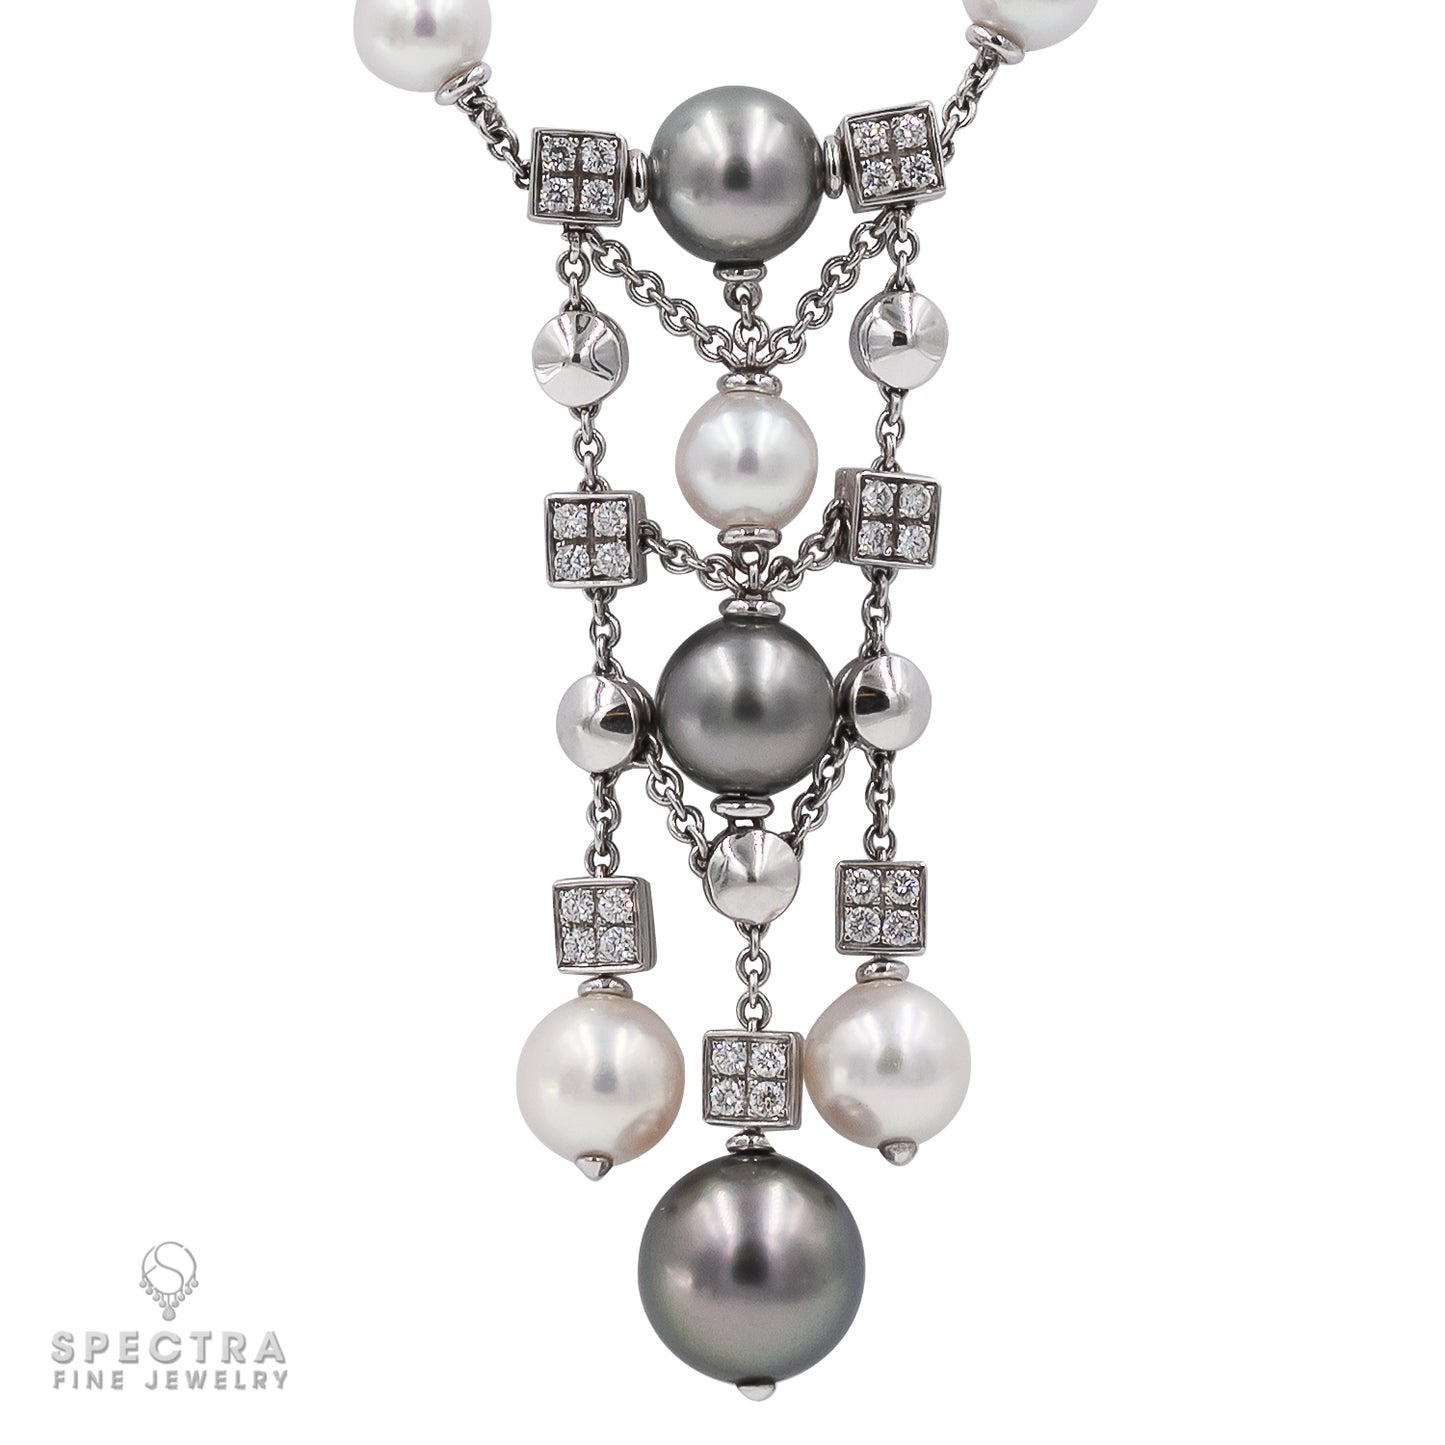 Bulgari Diamond and Pearl Demi-Parure: A Stunning Art Deco Tribute